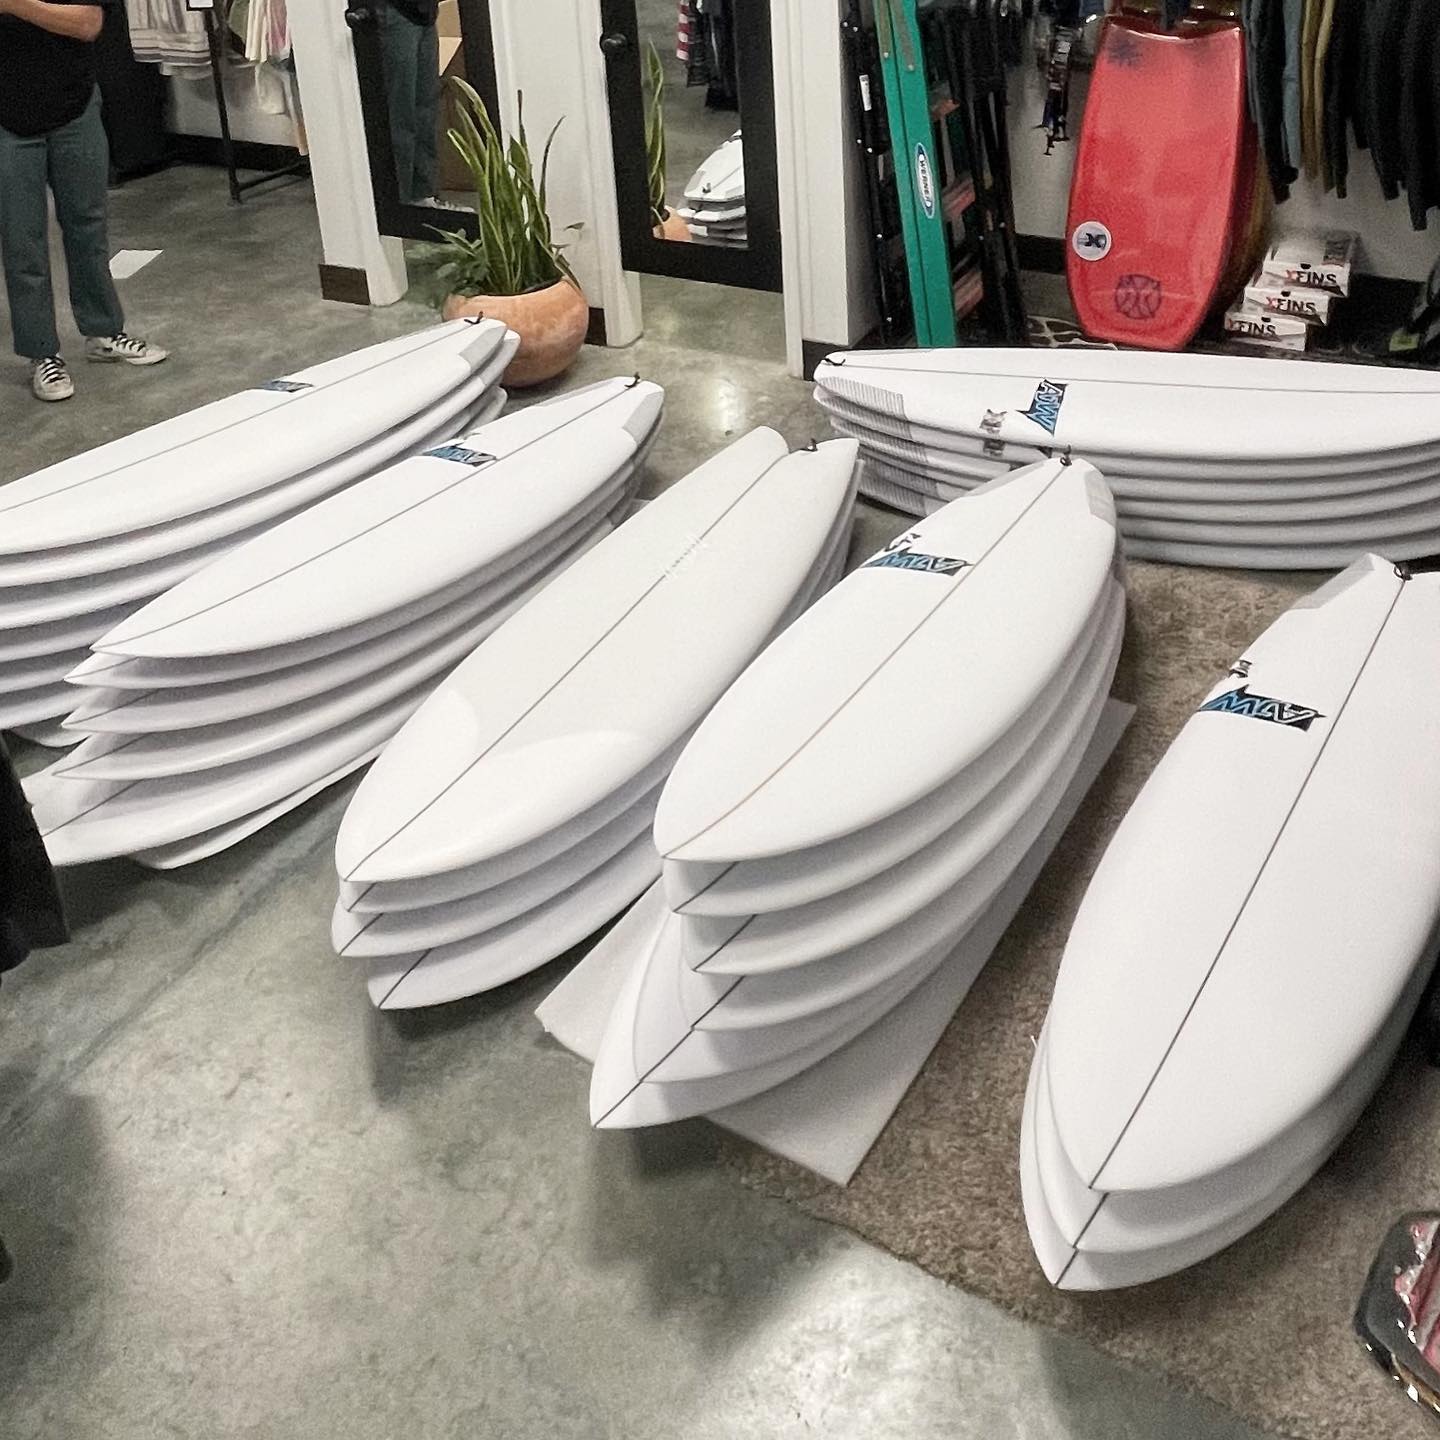 AJW Surfboards